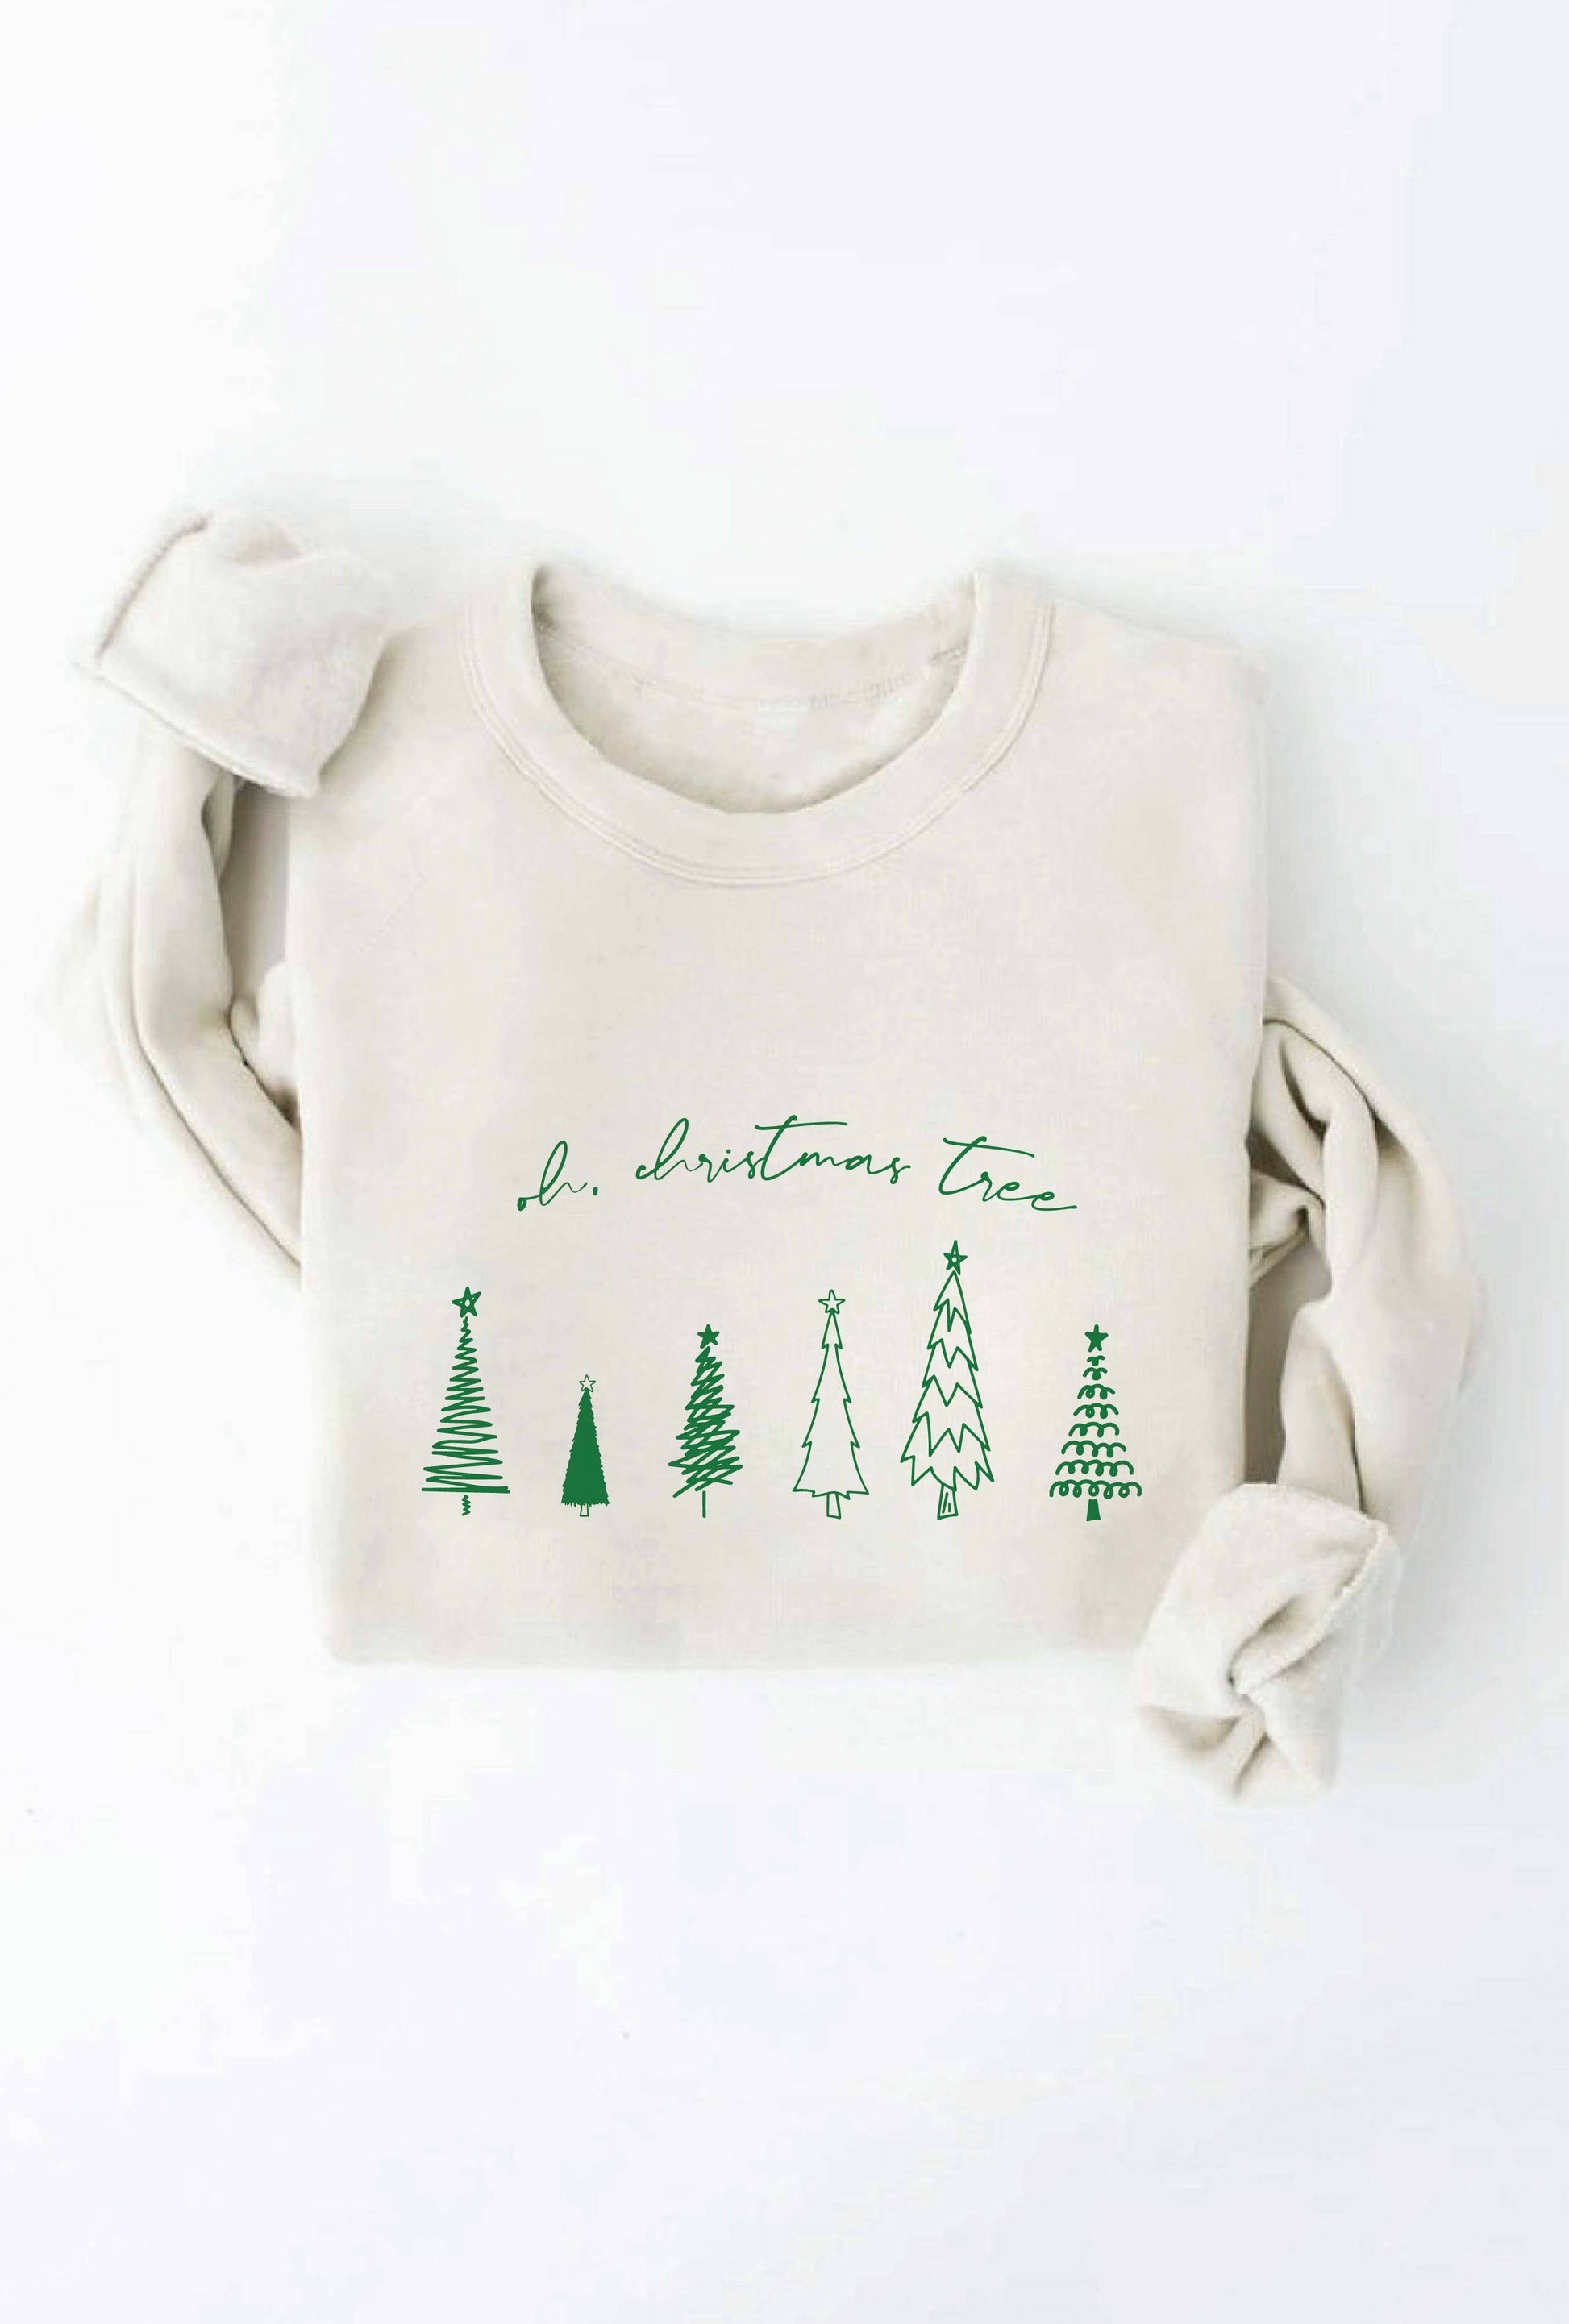 OH, CHRISTMAS TREE  Graphic Sweatshirt - Storm and Sky Shoppe